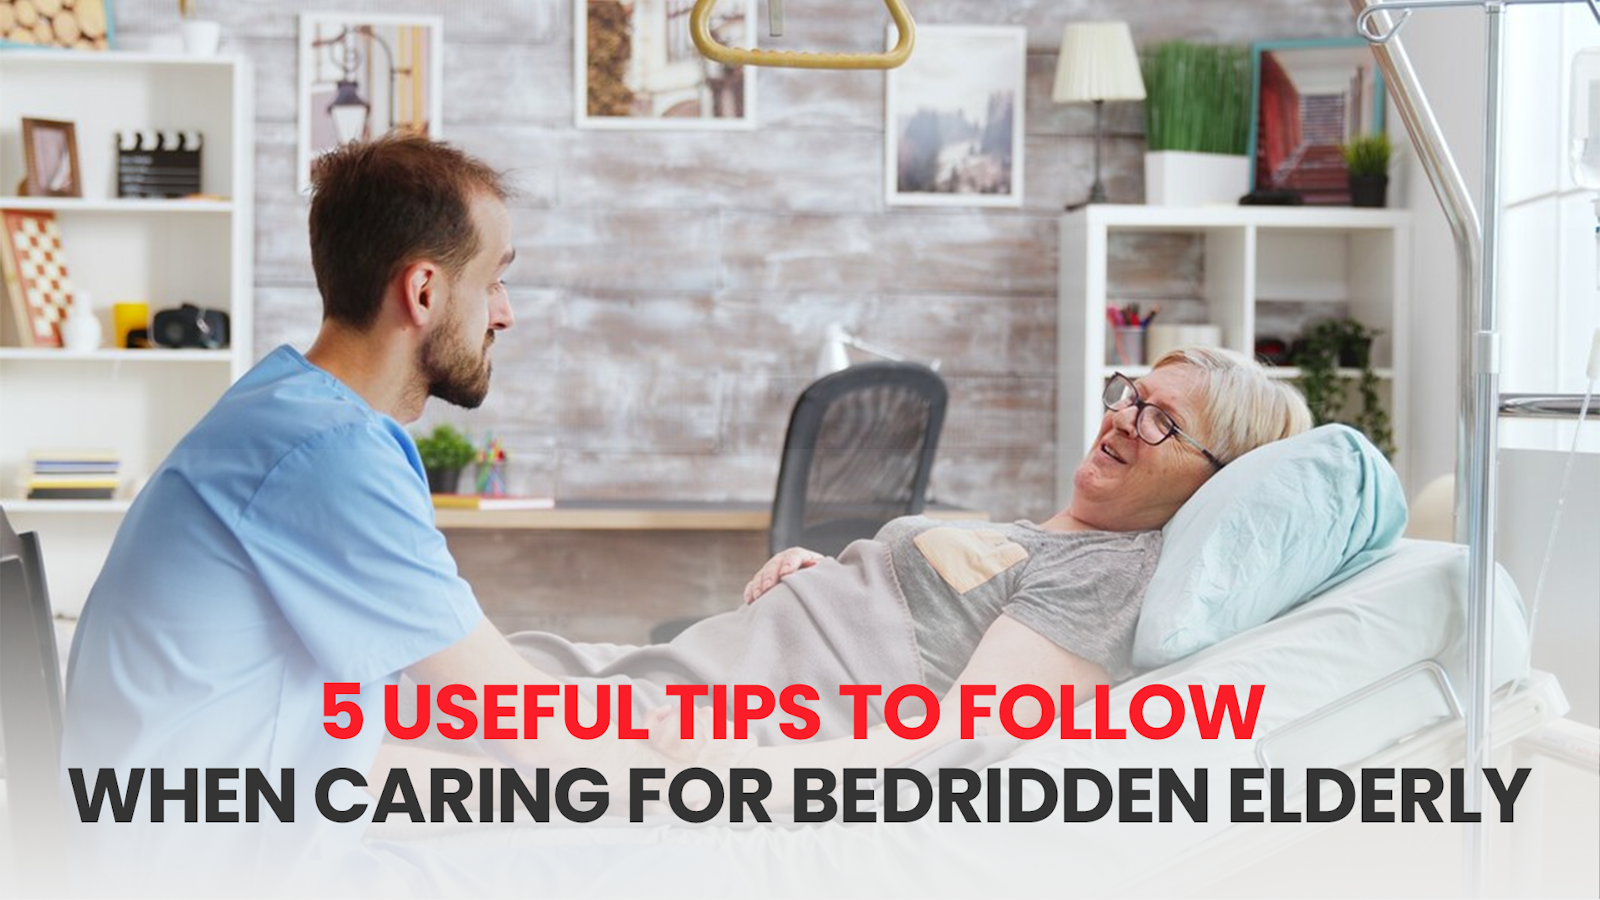 5 USEFUL TIPS TO FOLLOW WHEN CARING FOR BEDRIDDEN ELDERLY